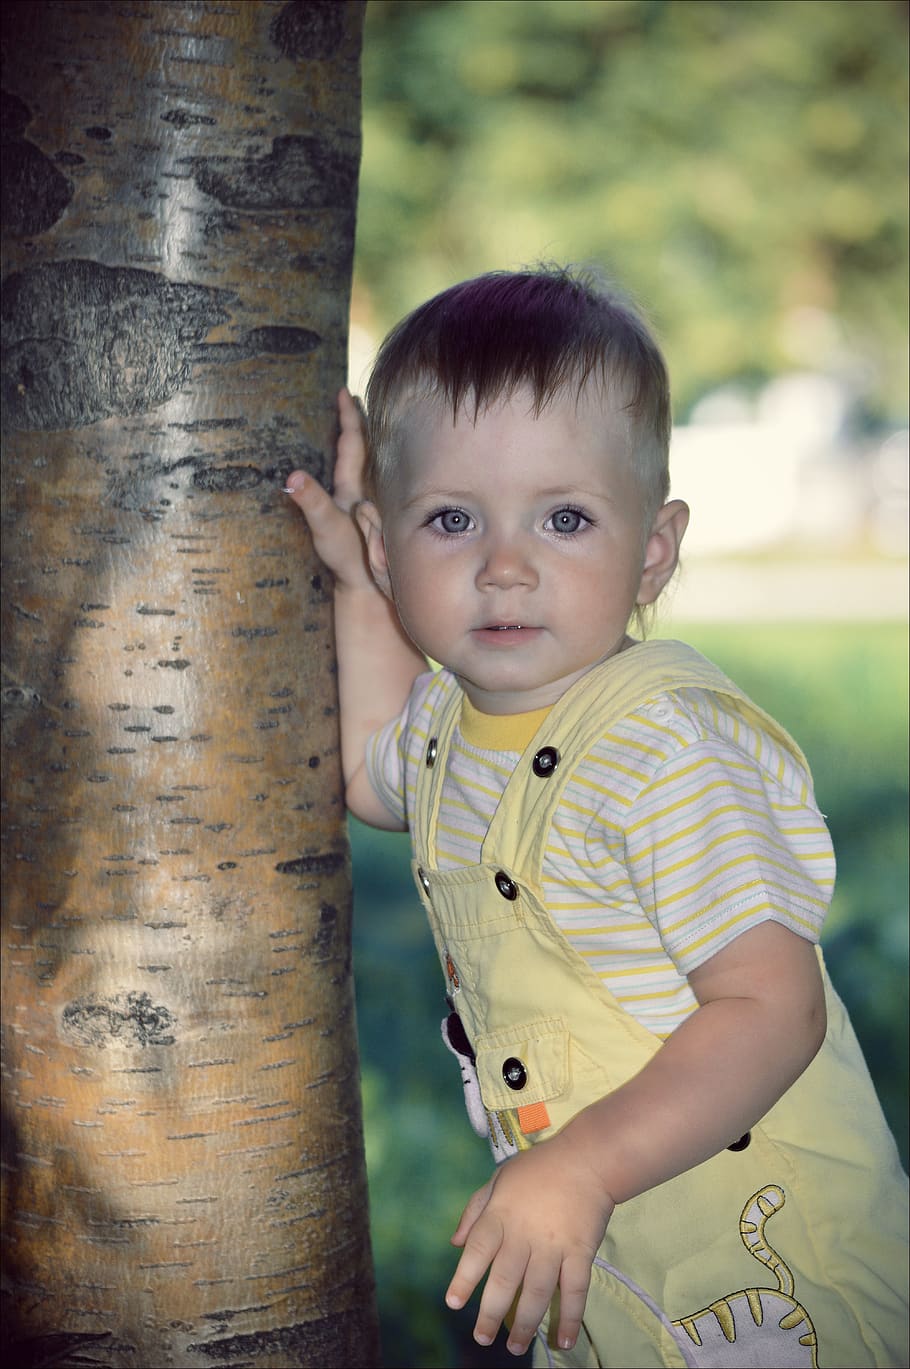 beautiful son, kid, baby, the tree, blue eyes, beautiful baby, child, childhood, portrait, innocence